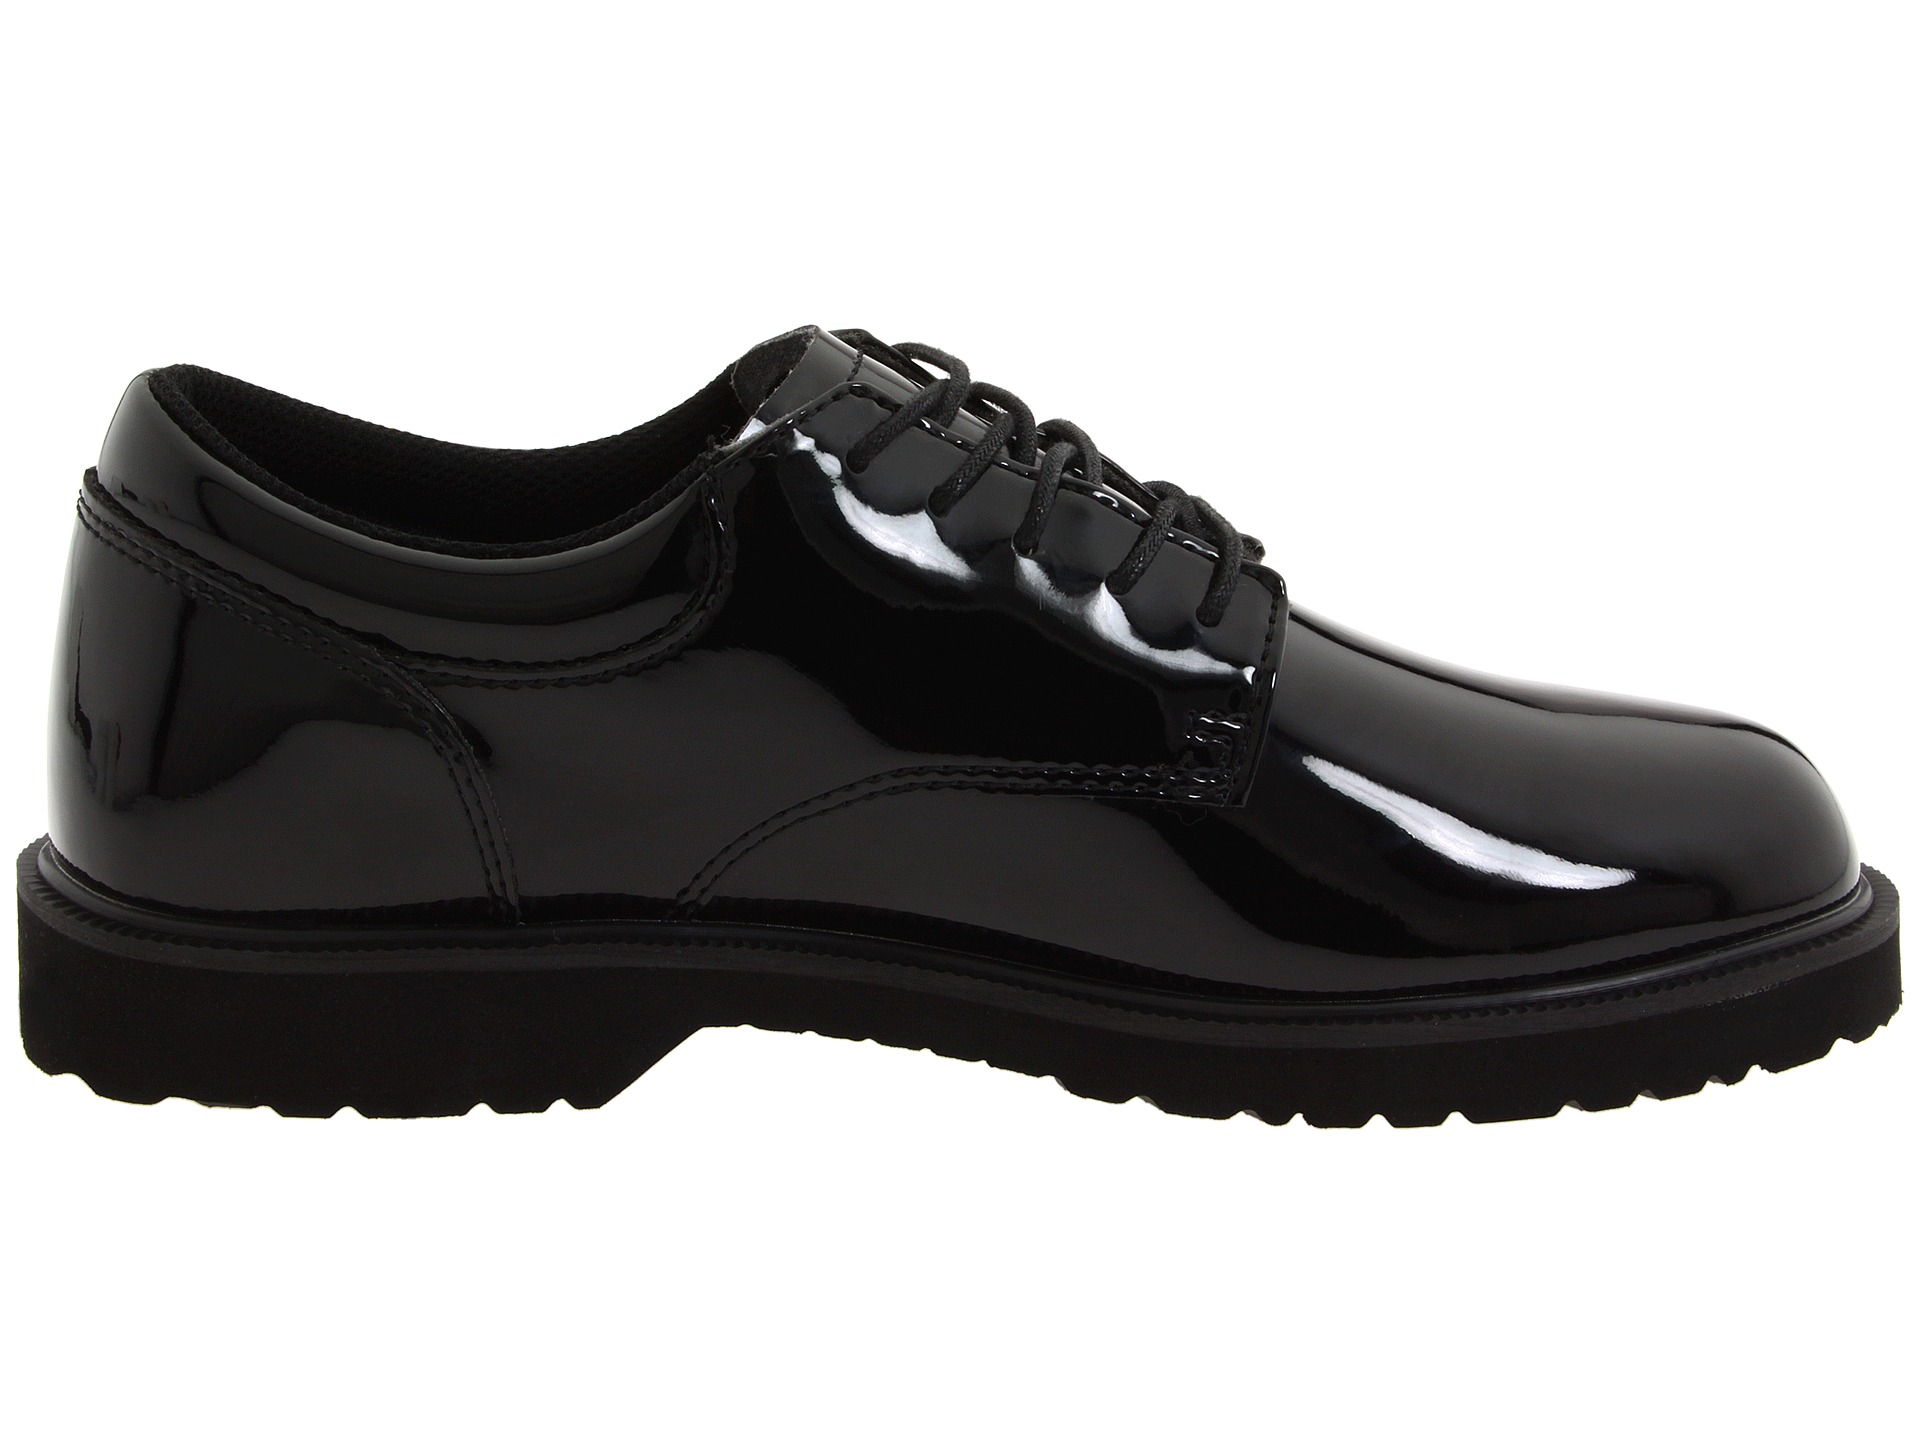 Bates Footwear High Gloss Uniform Oxford - Zappos Free Shipping ...